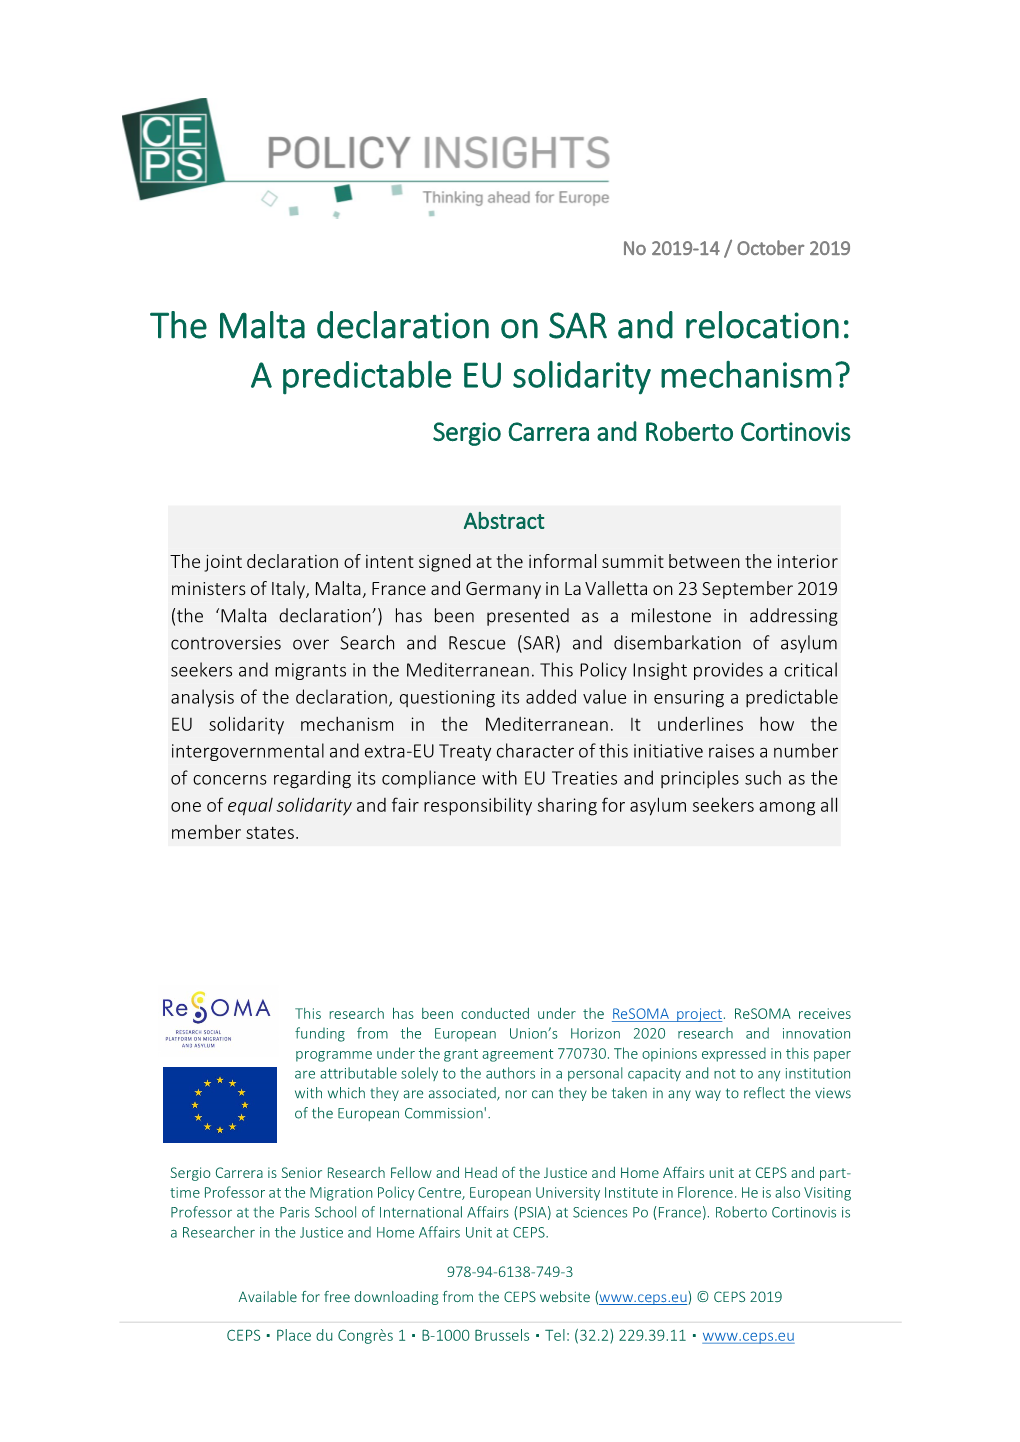 The Malta Declaration on SAR and Relocation: a Predictable EU Solidarity Mechanism? Sergio Carrera and Roberto Cortinovis